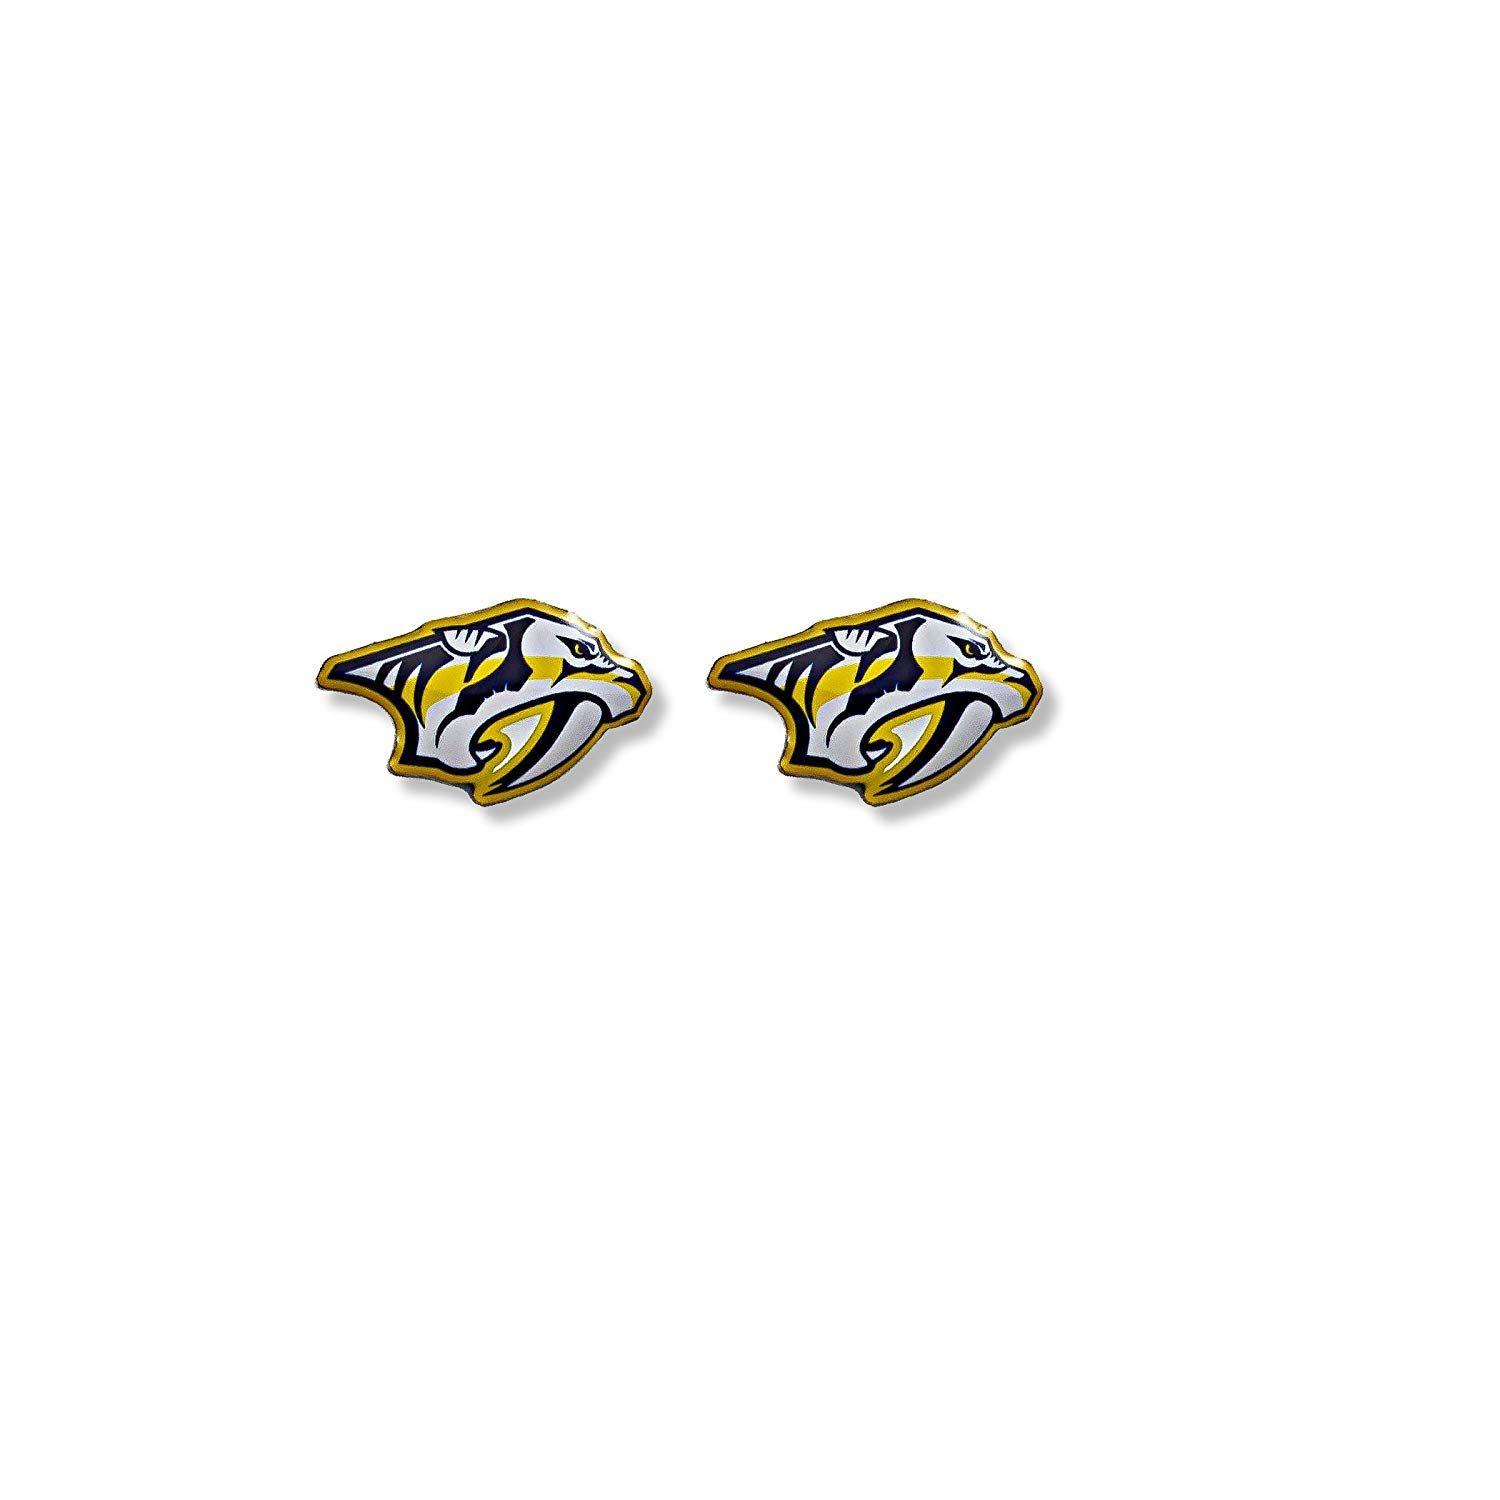 Predators Logo - Amazon.com : NHL Nashville Predators Logo Post Earrings : Sports Fan